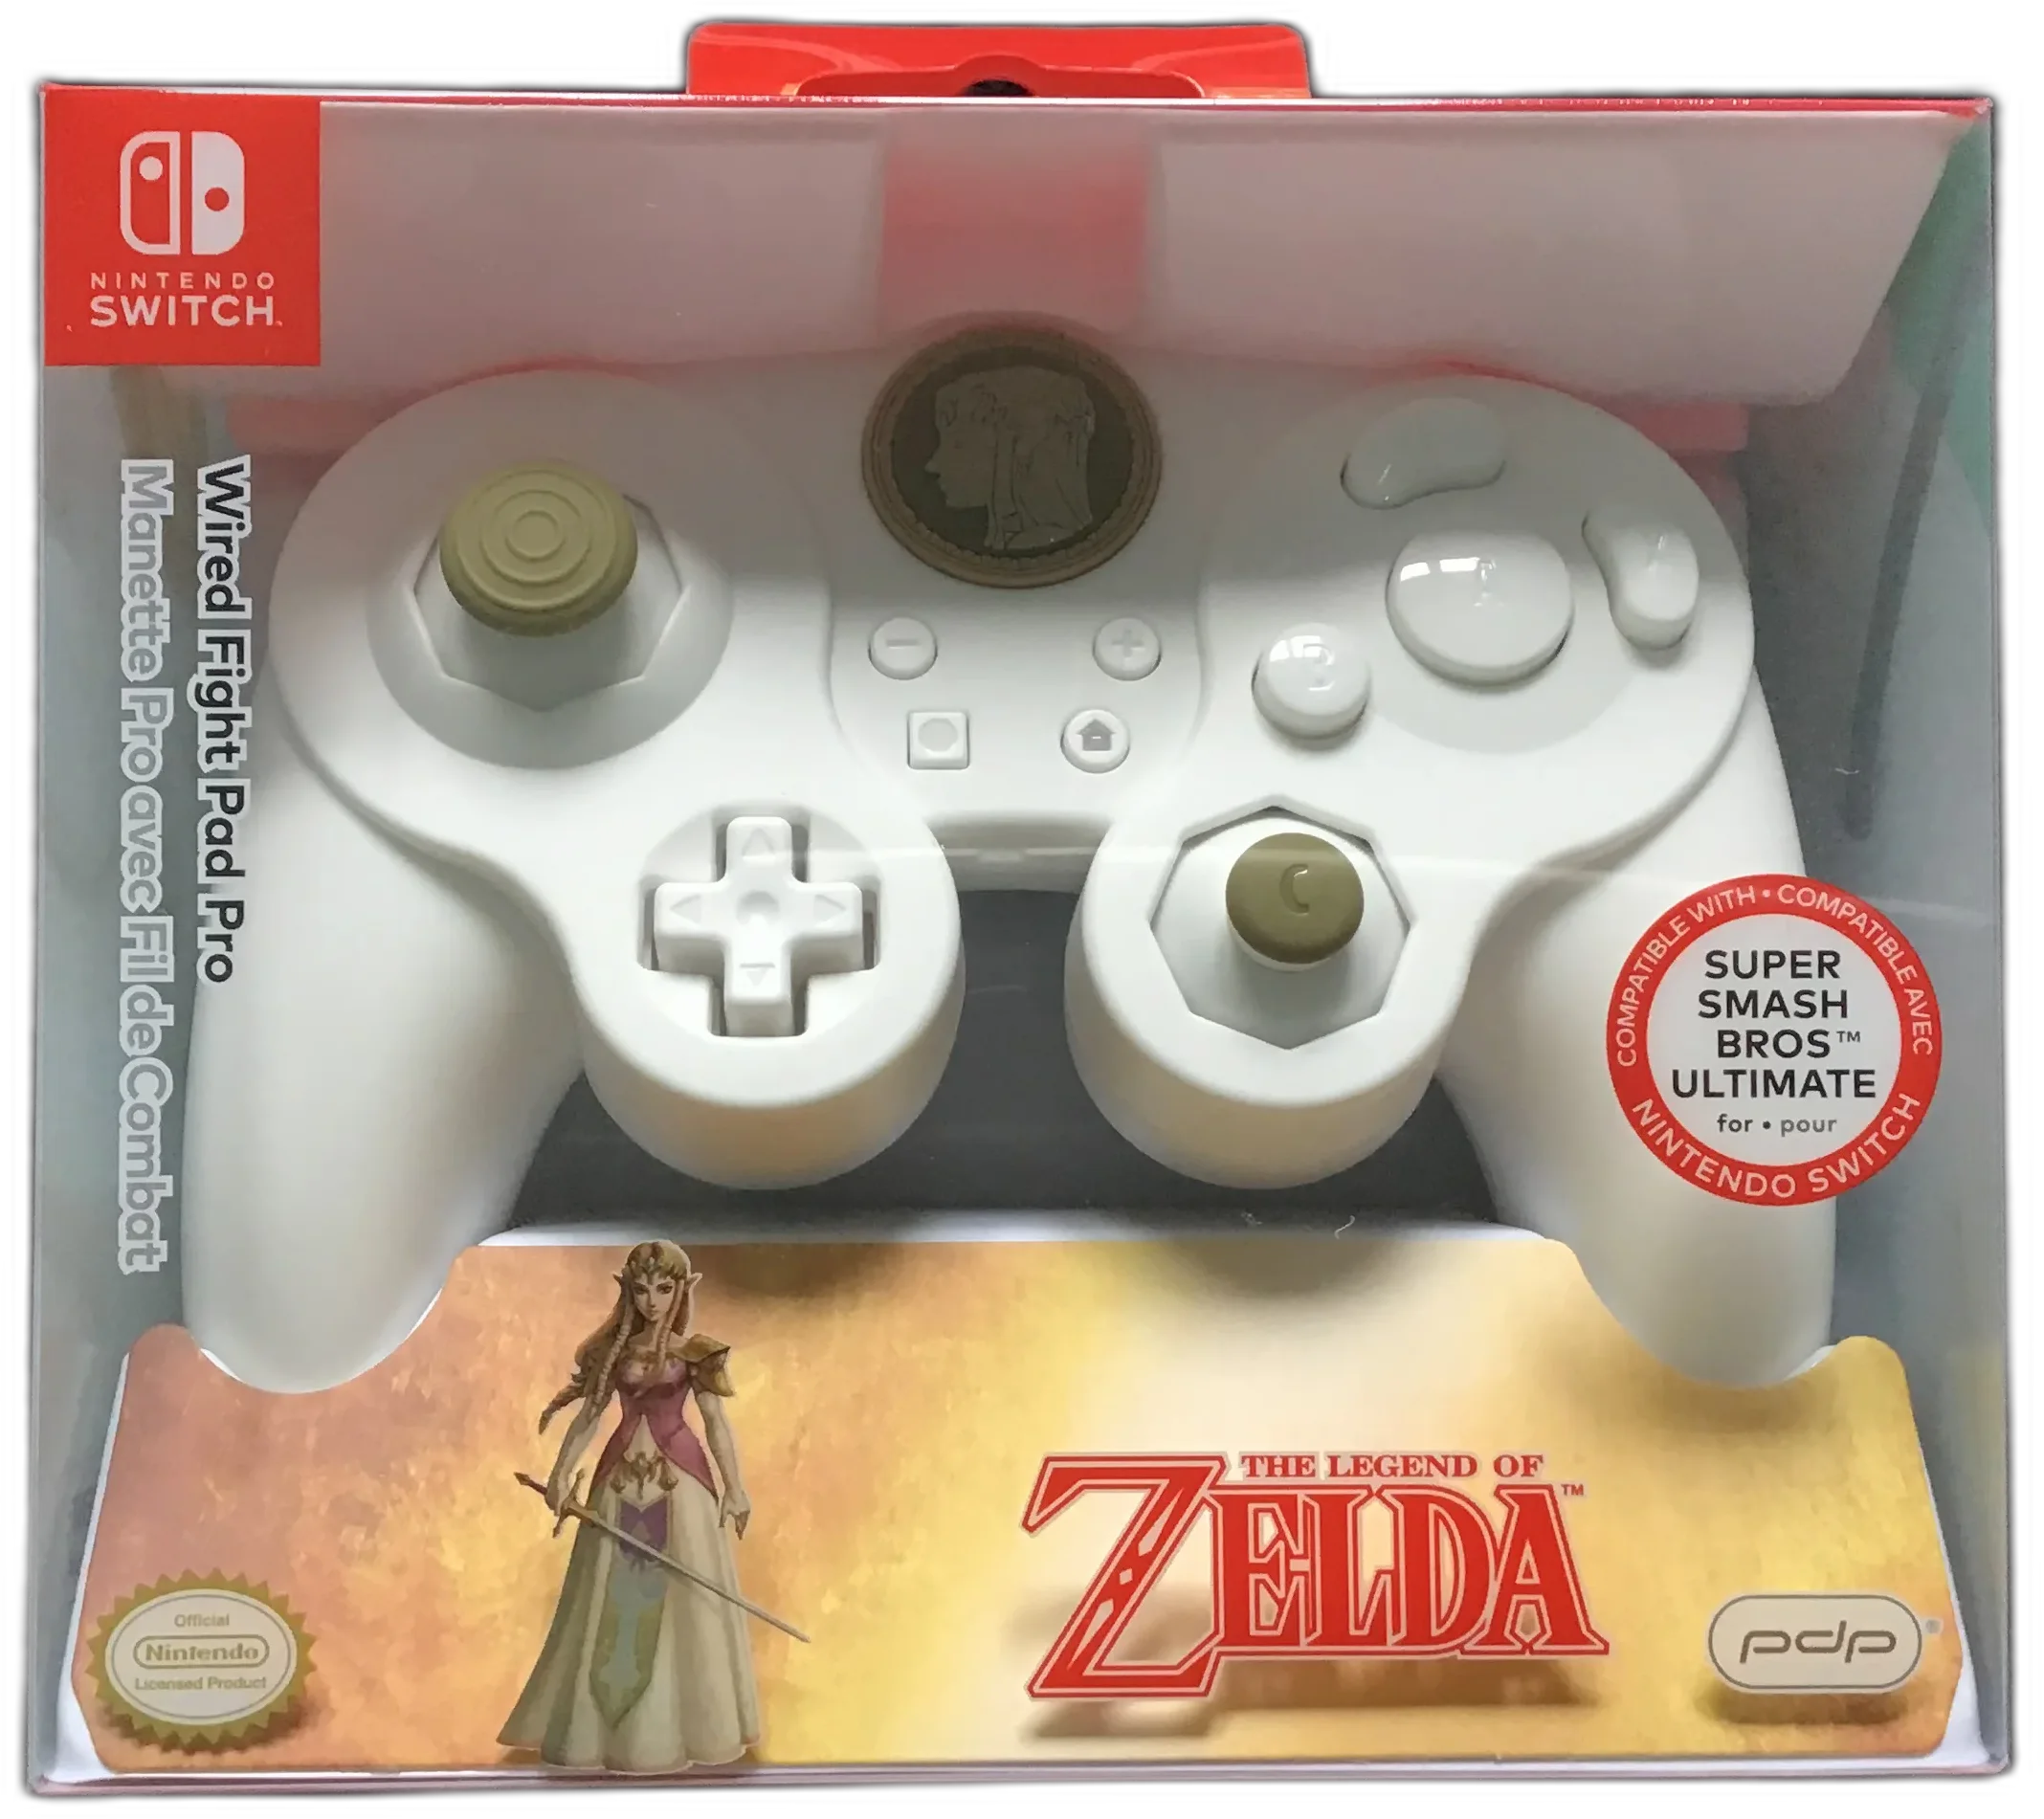  PDP Switch Zelda GameCube Controller